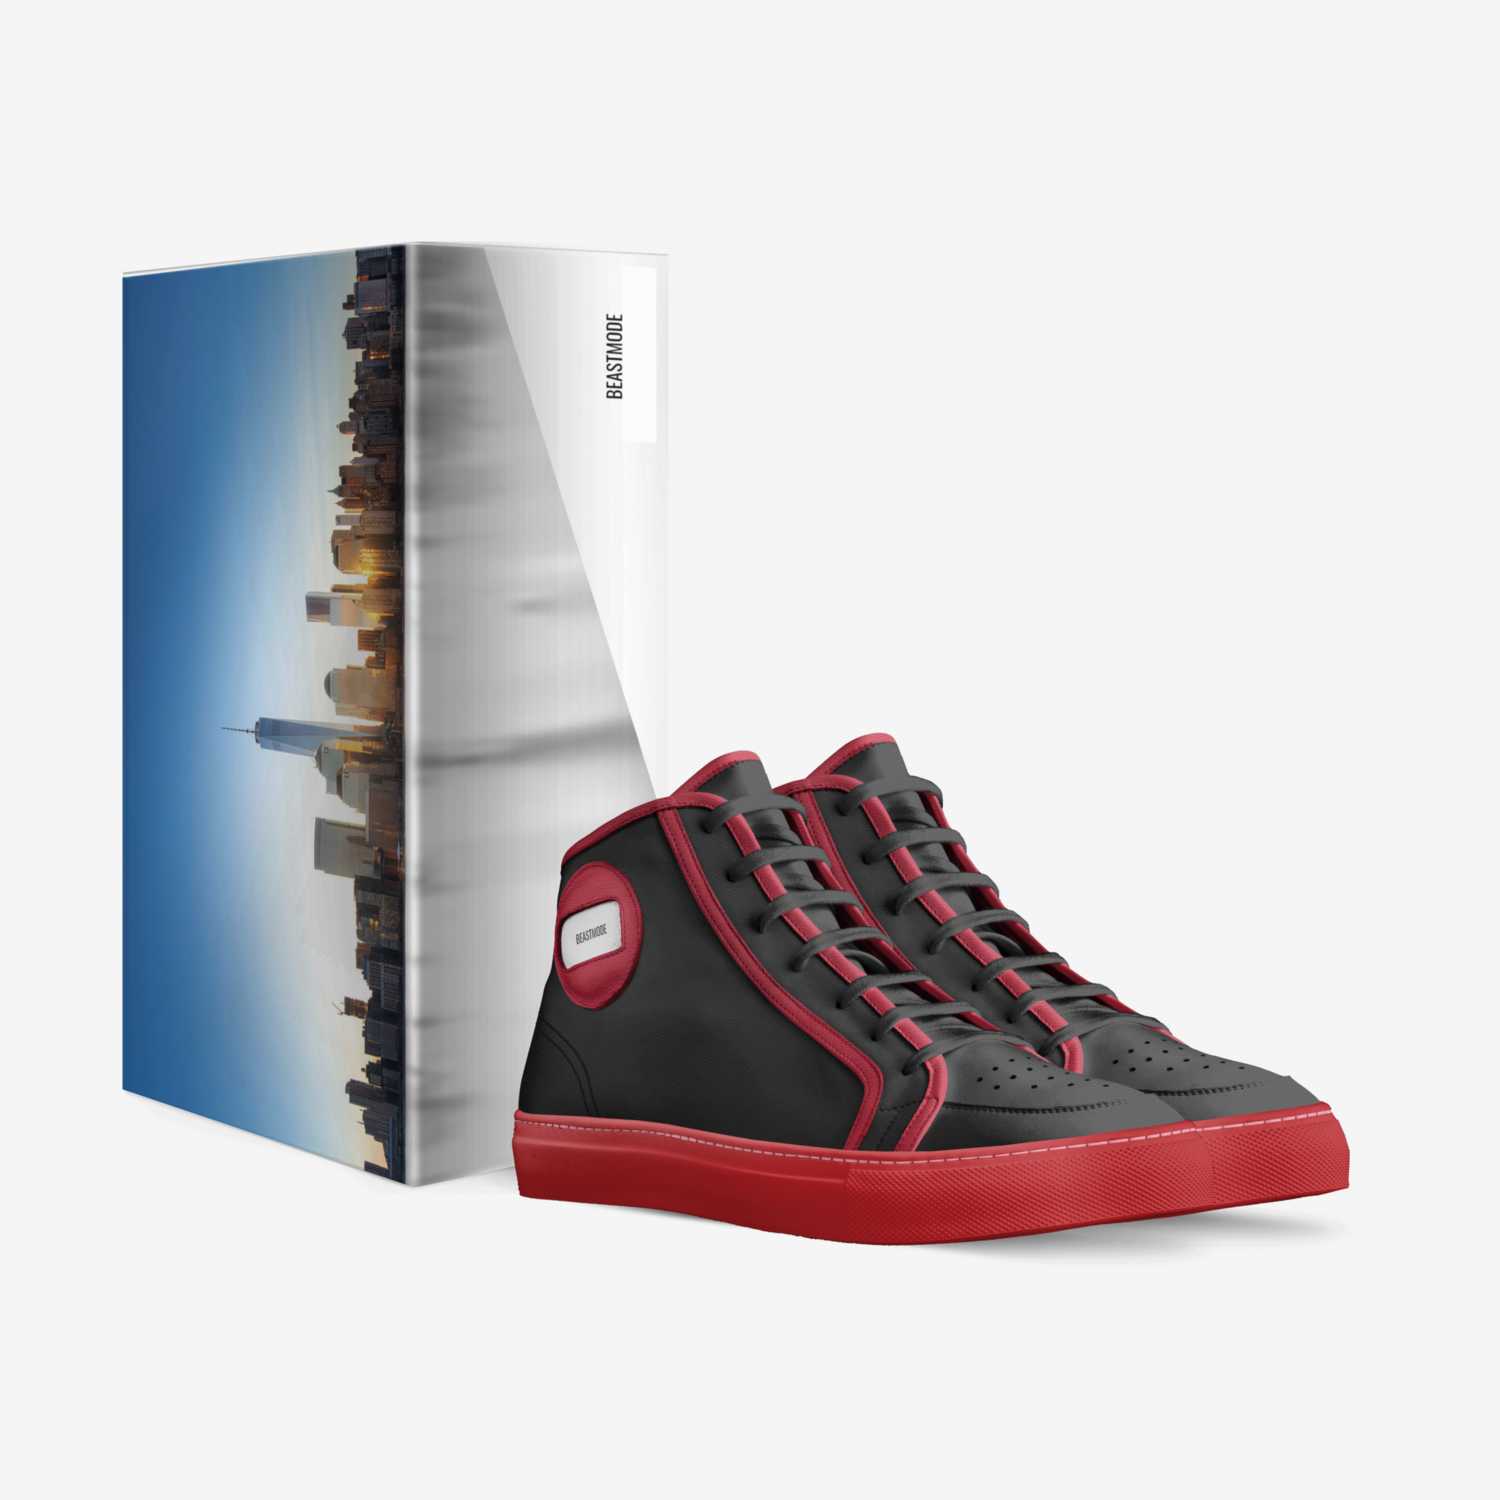 Beastmode  custom made in Italy shoes by Jacksonvanndowdley | Box view